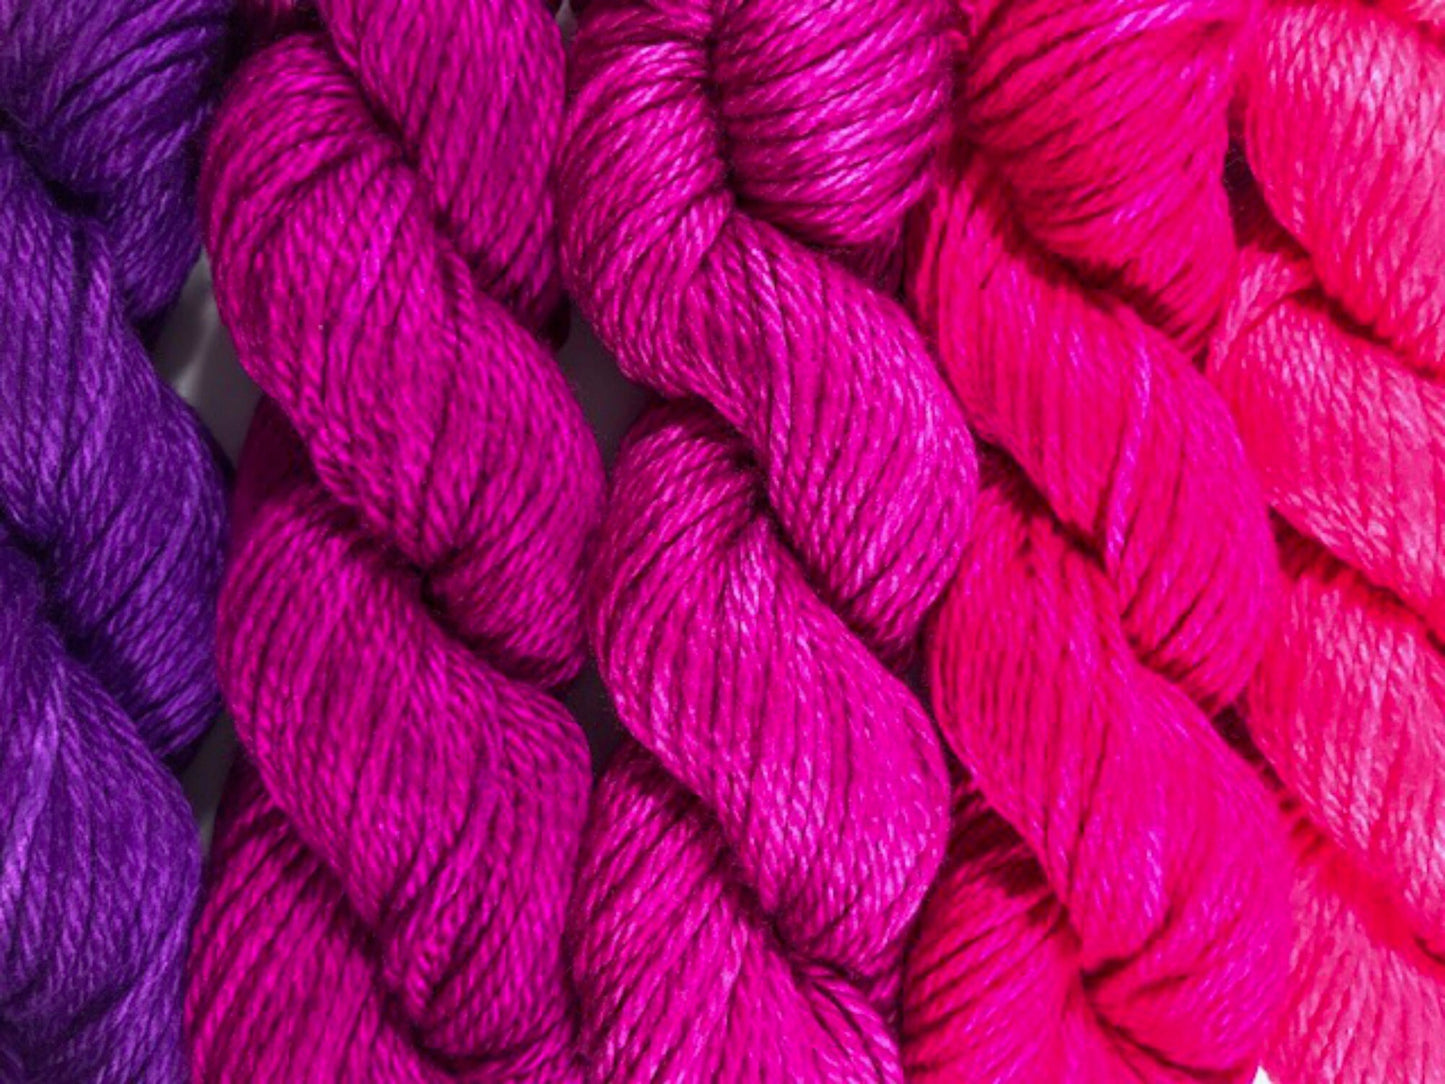 Hand Dyed Vegan Yarn Kit - Pink & Purple Gradient - Bamboo Cotton - DK Light Worsted - 3 Ply Semi Solids - Indie Dyed - Tonal Artisan Yarn